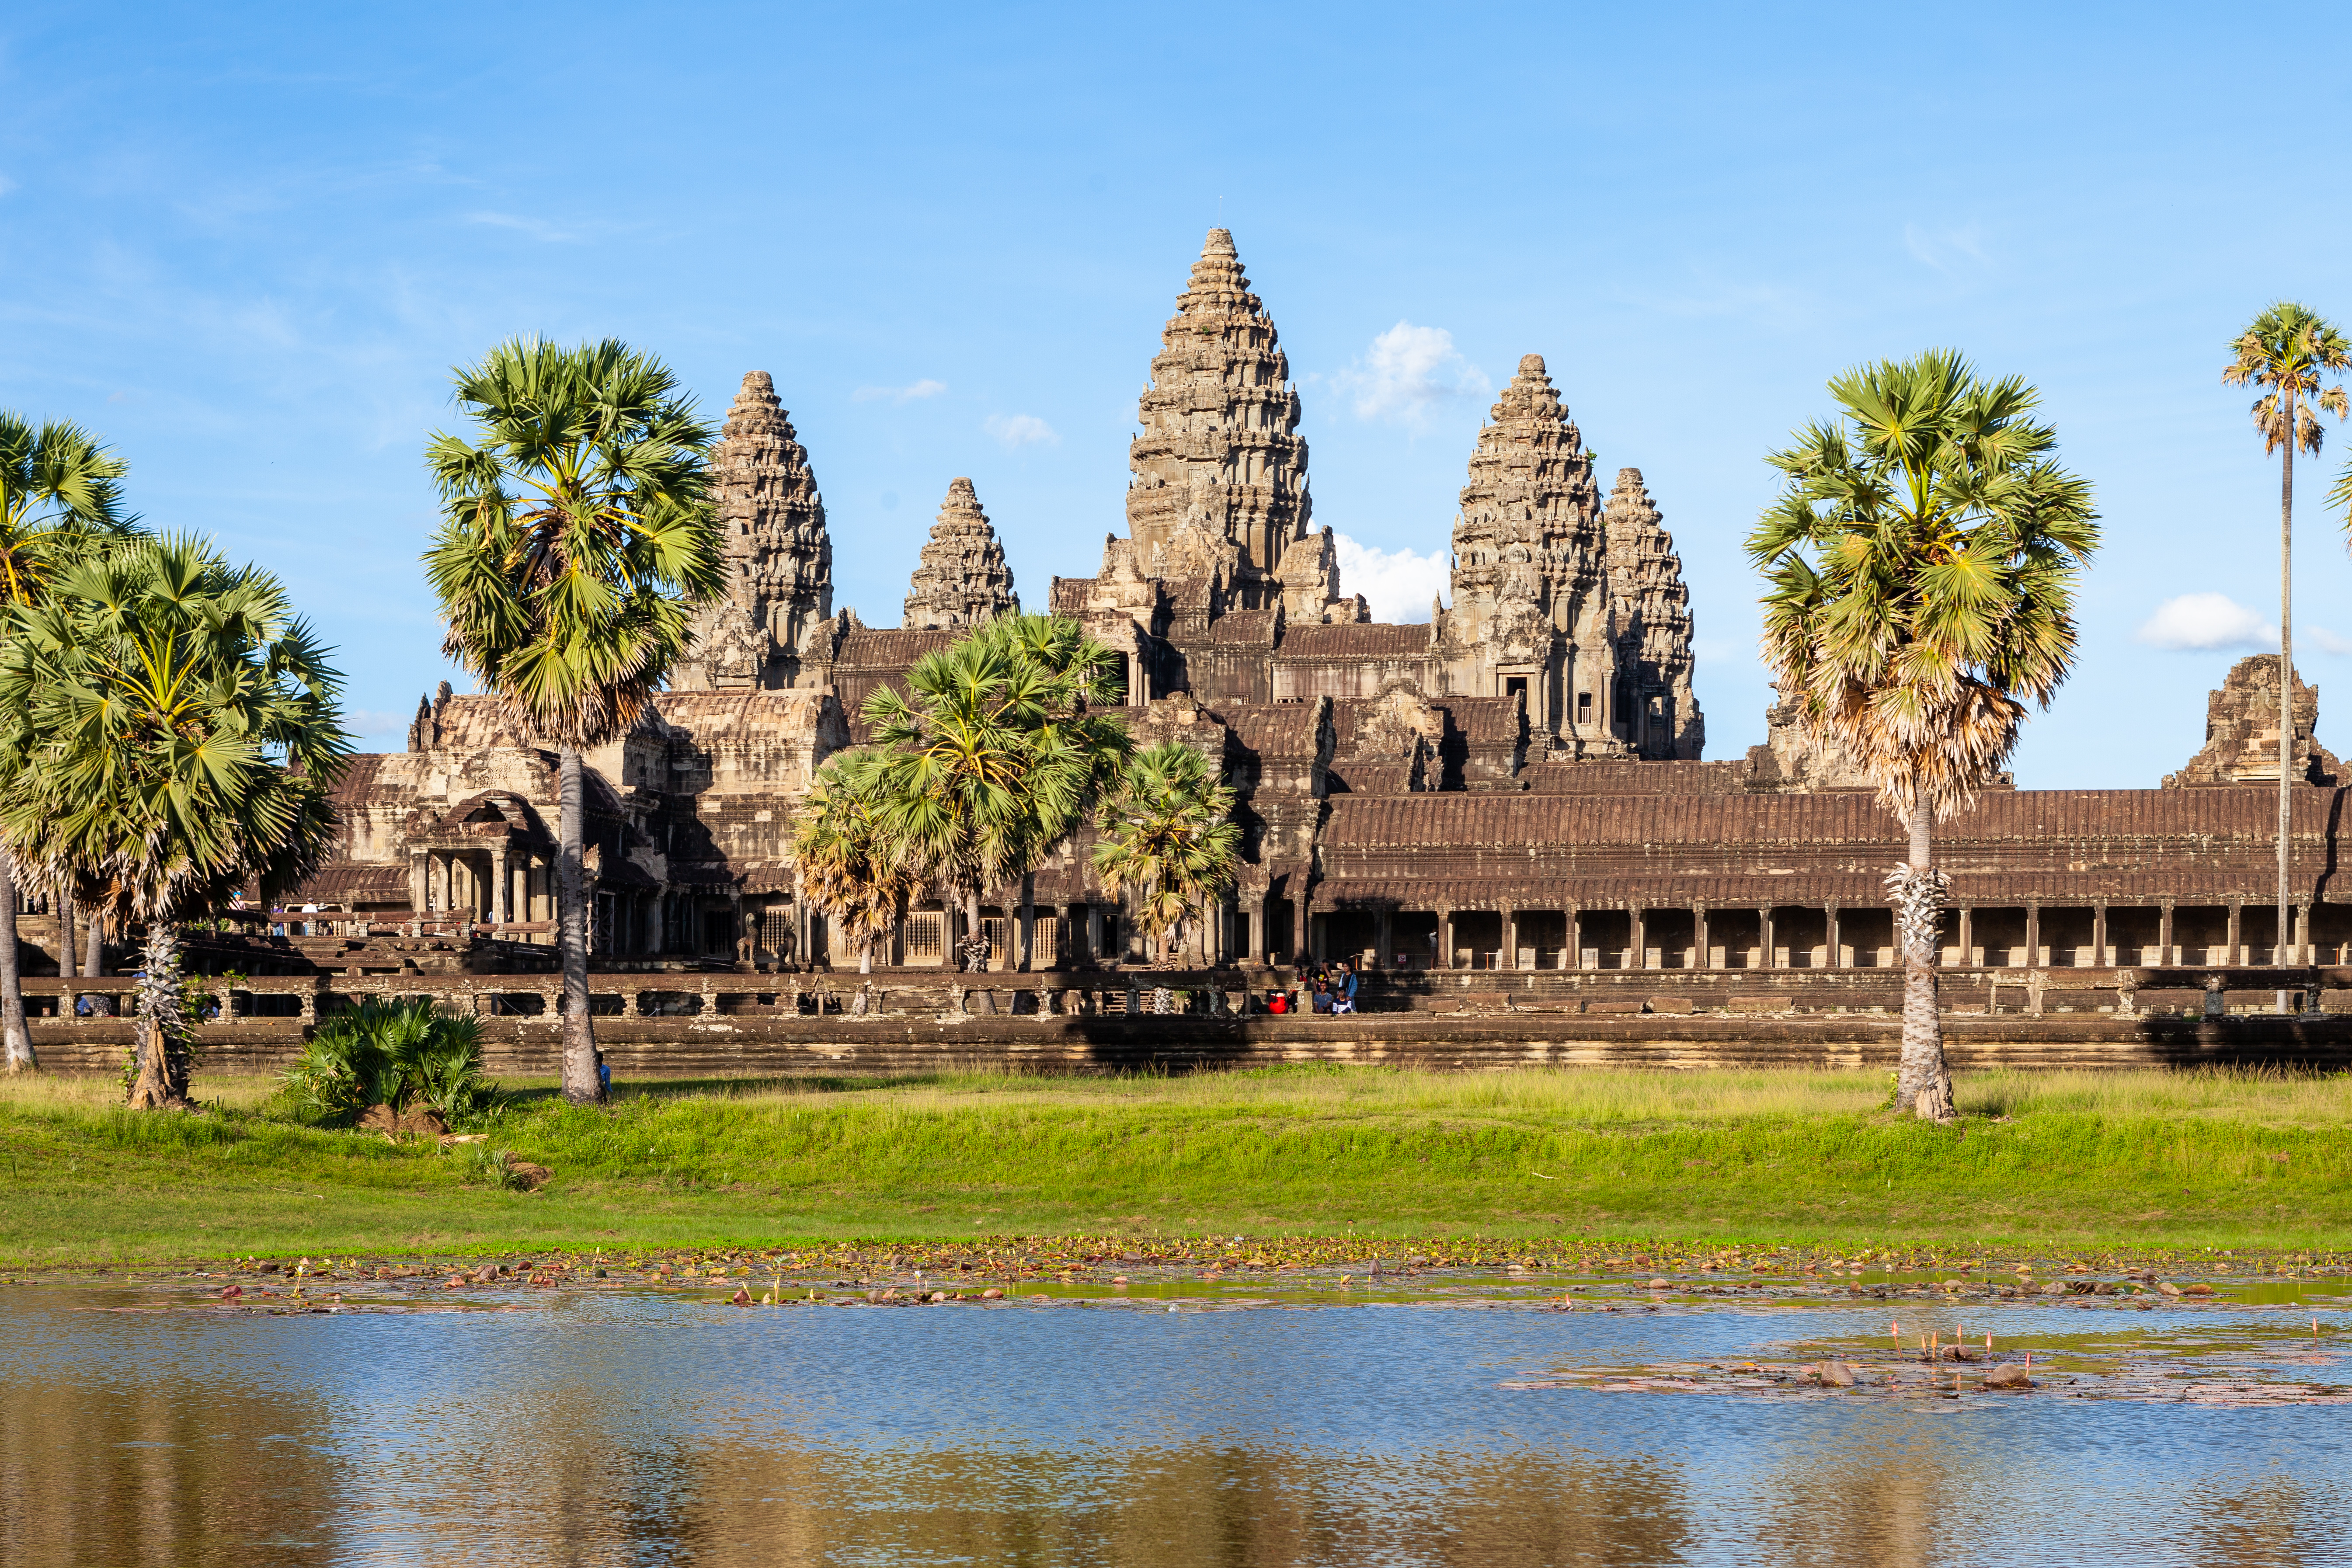 Cambodia (Angkor Wat) Travel Guide & Itinerary 2020 | 3 Days/2 Night Tour 6